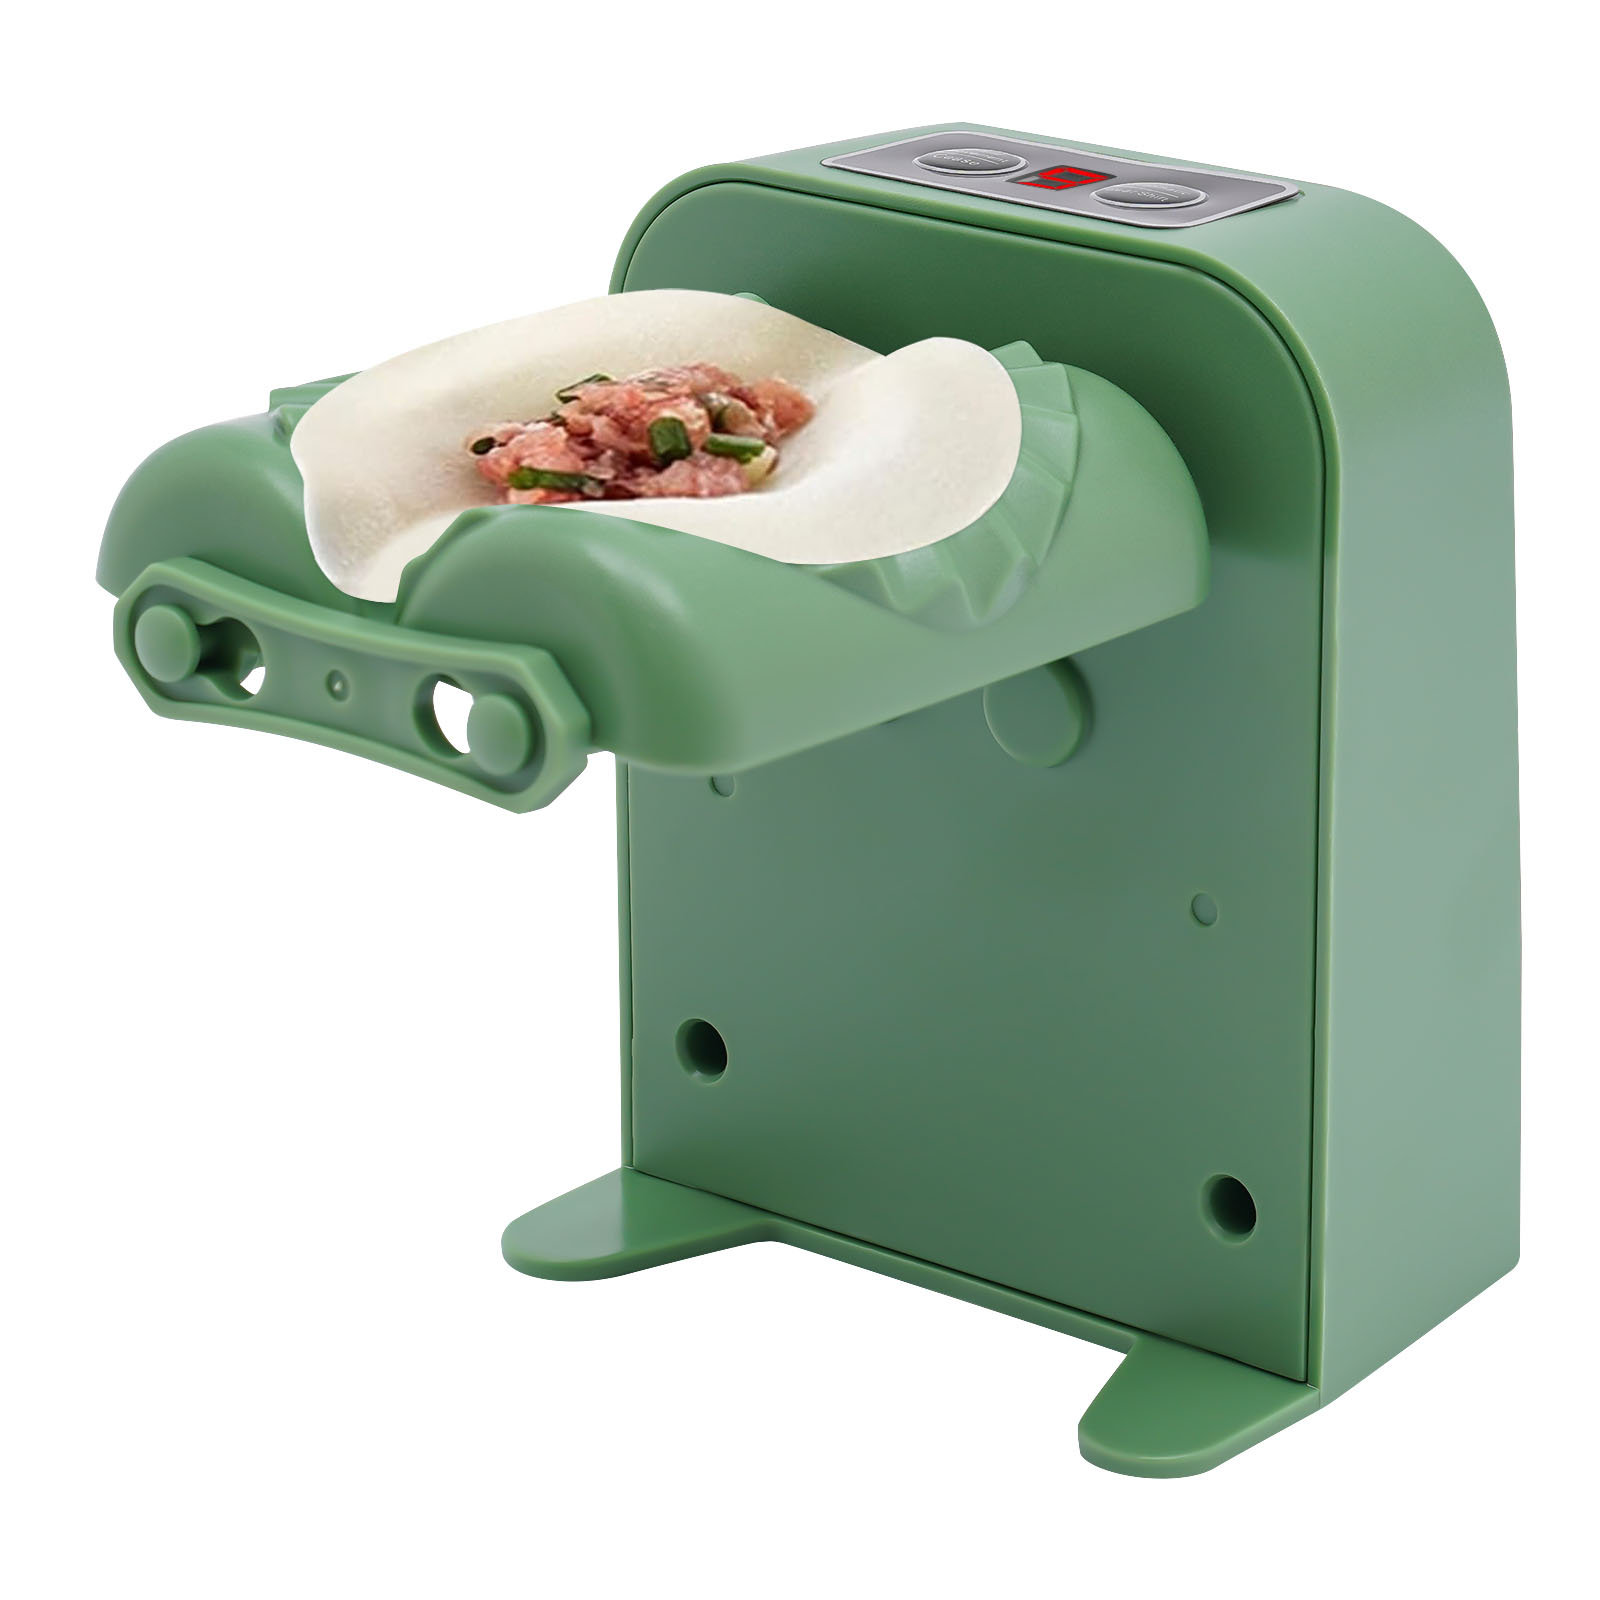 Electric Pasta Noodle Maker 5 Molds Machine Rechargeable